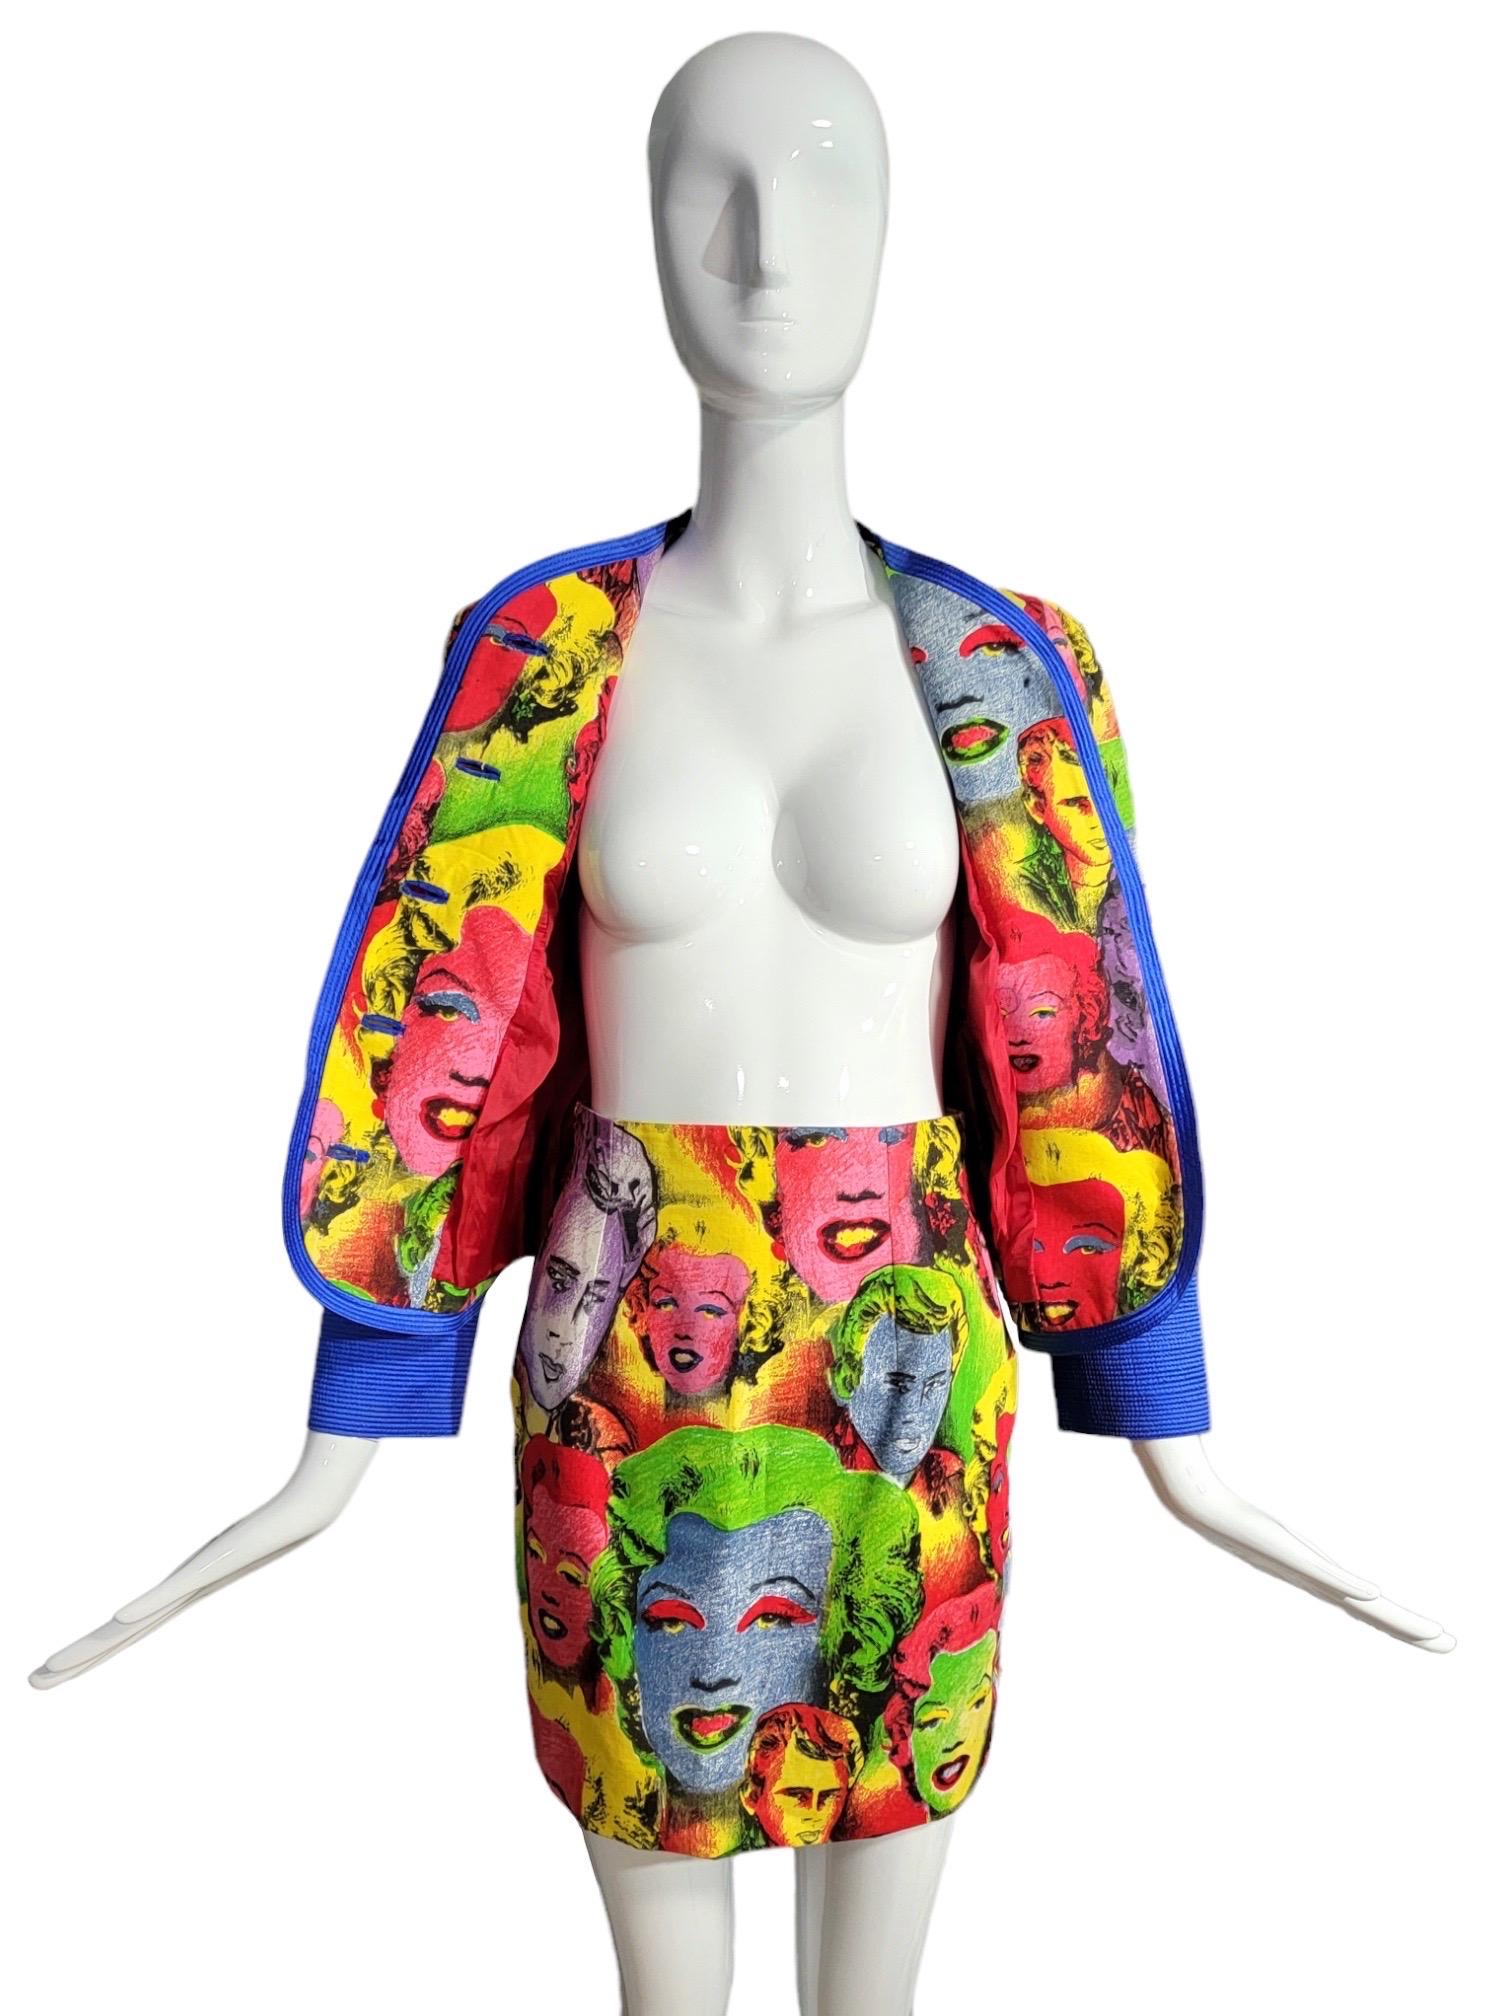  S/S 1991 Gianni Versace Marilyn Monroe Pop Art Warhol Skirt Suit For Sale 3